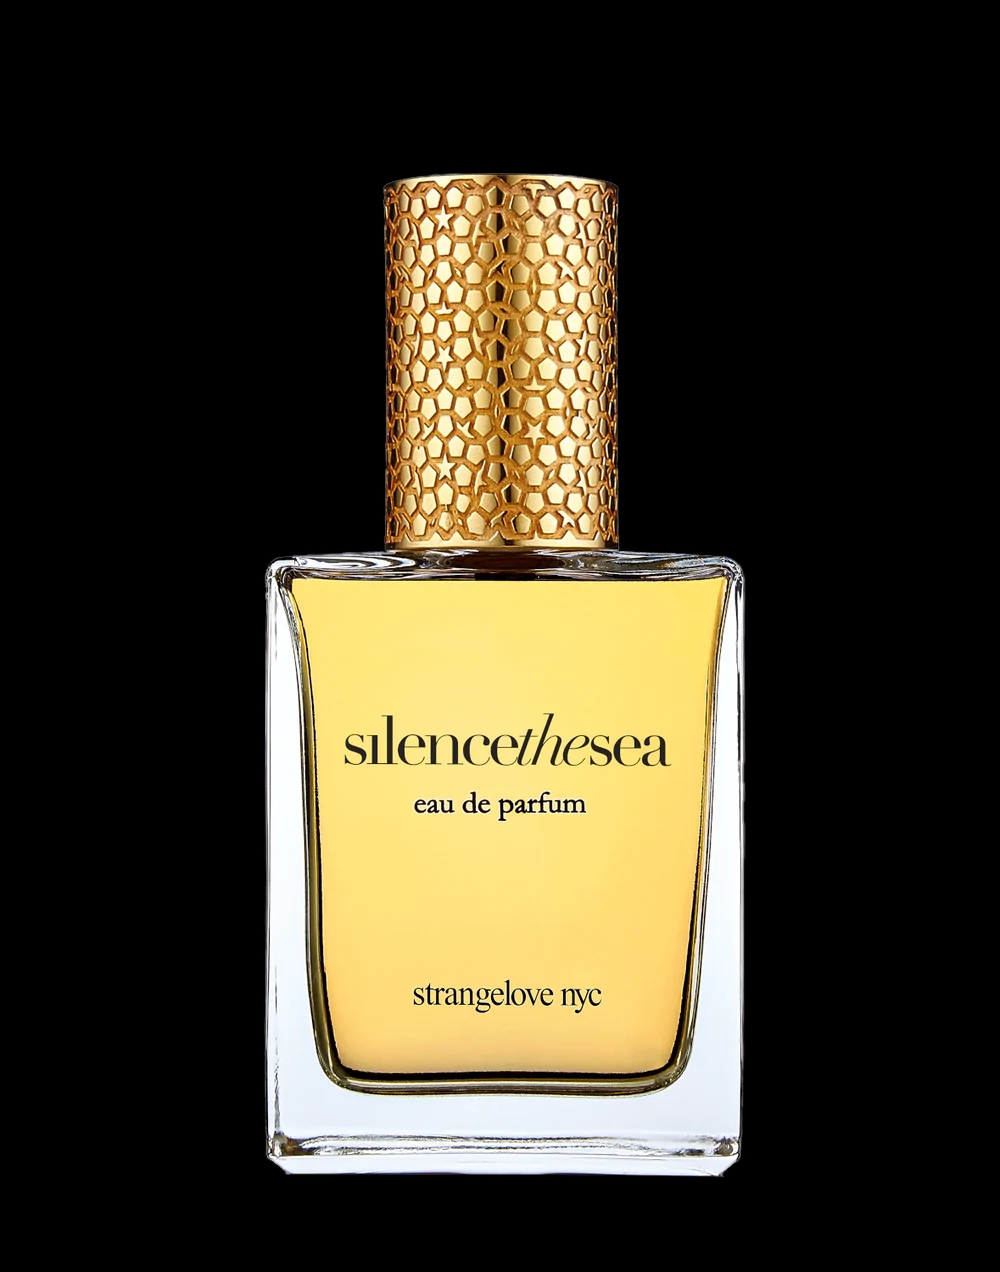 strangelove - silencethesea 50 ml | Perfume Lounge